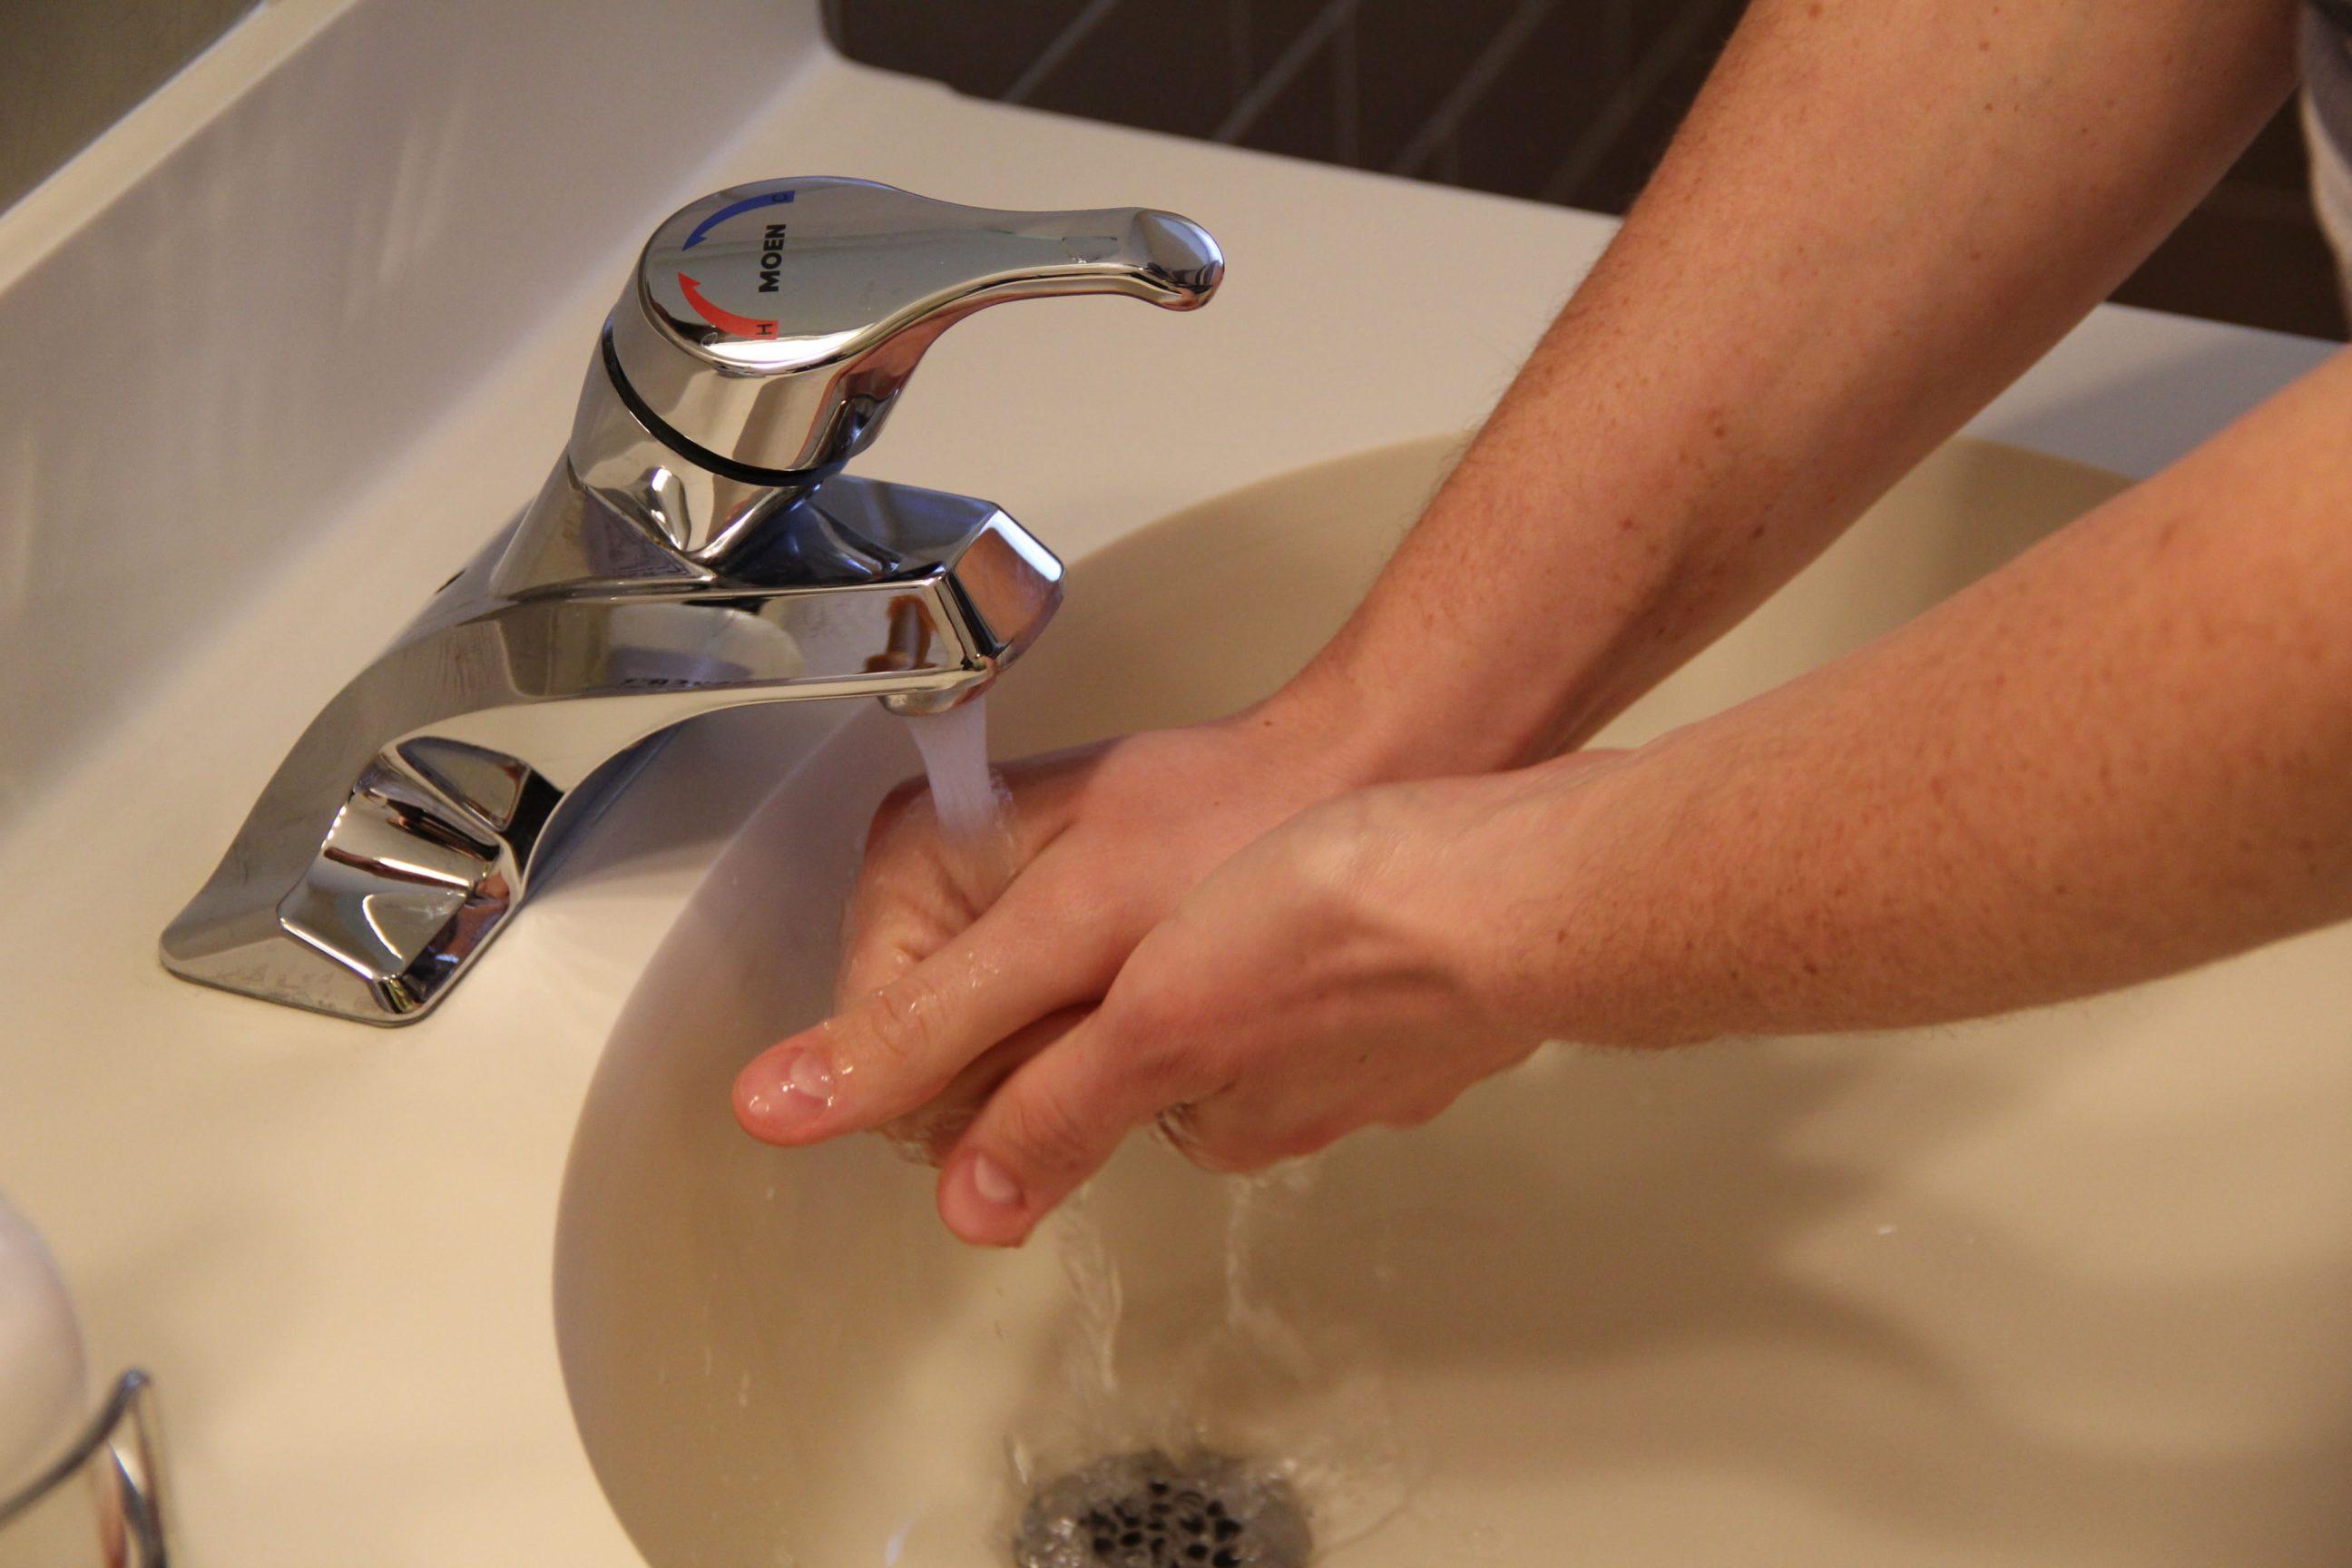 Washing hands, Moen faucet